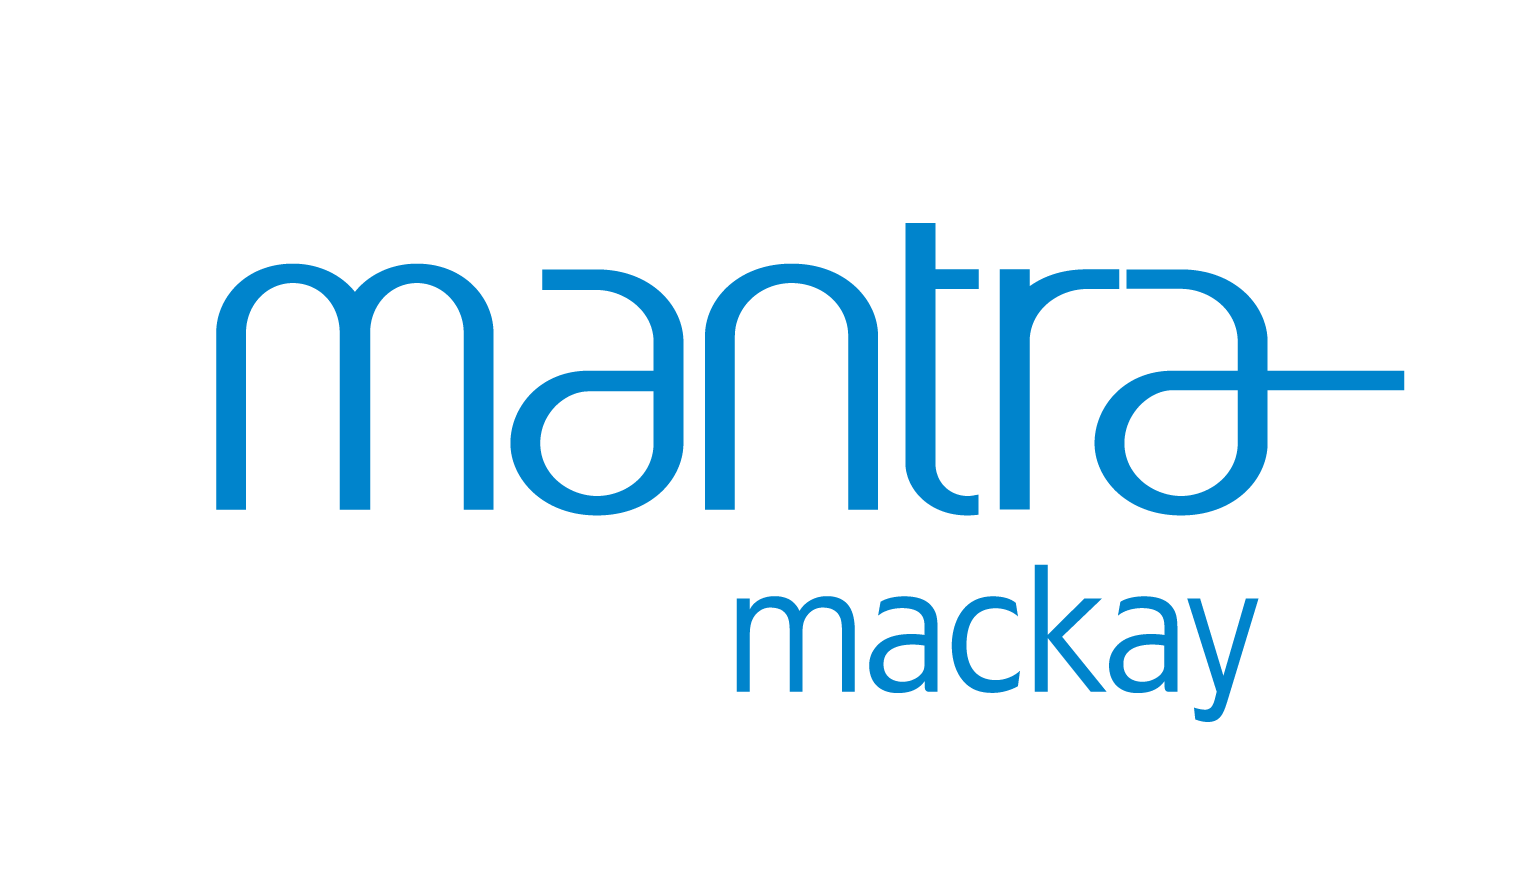 Mantra Mackay